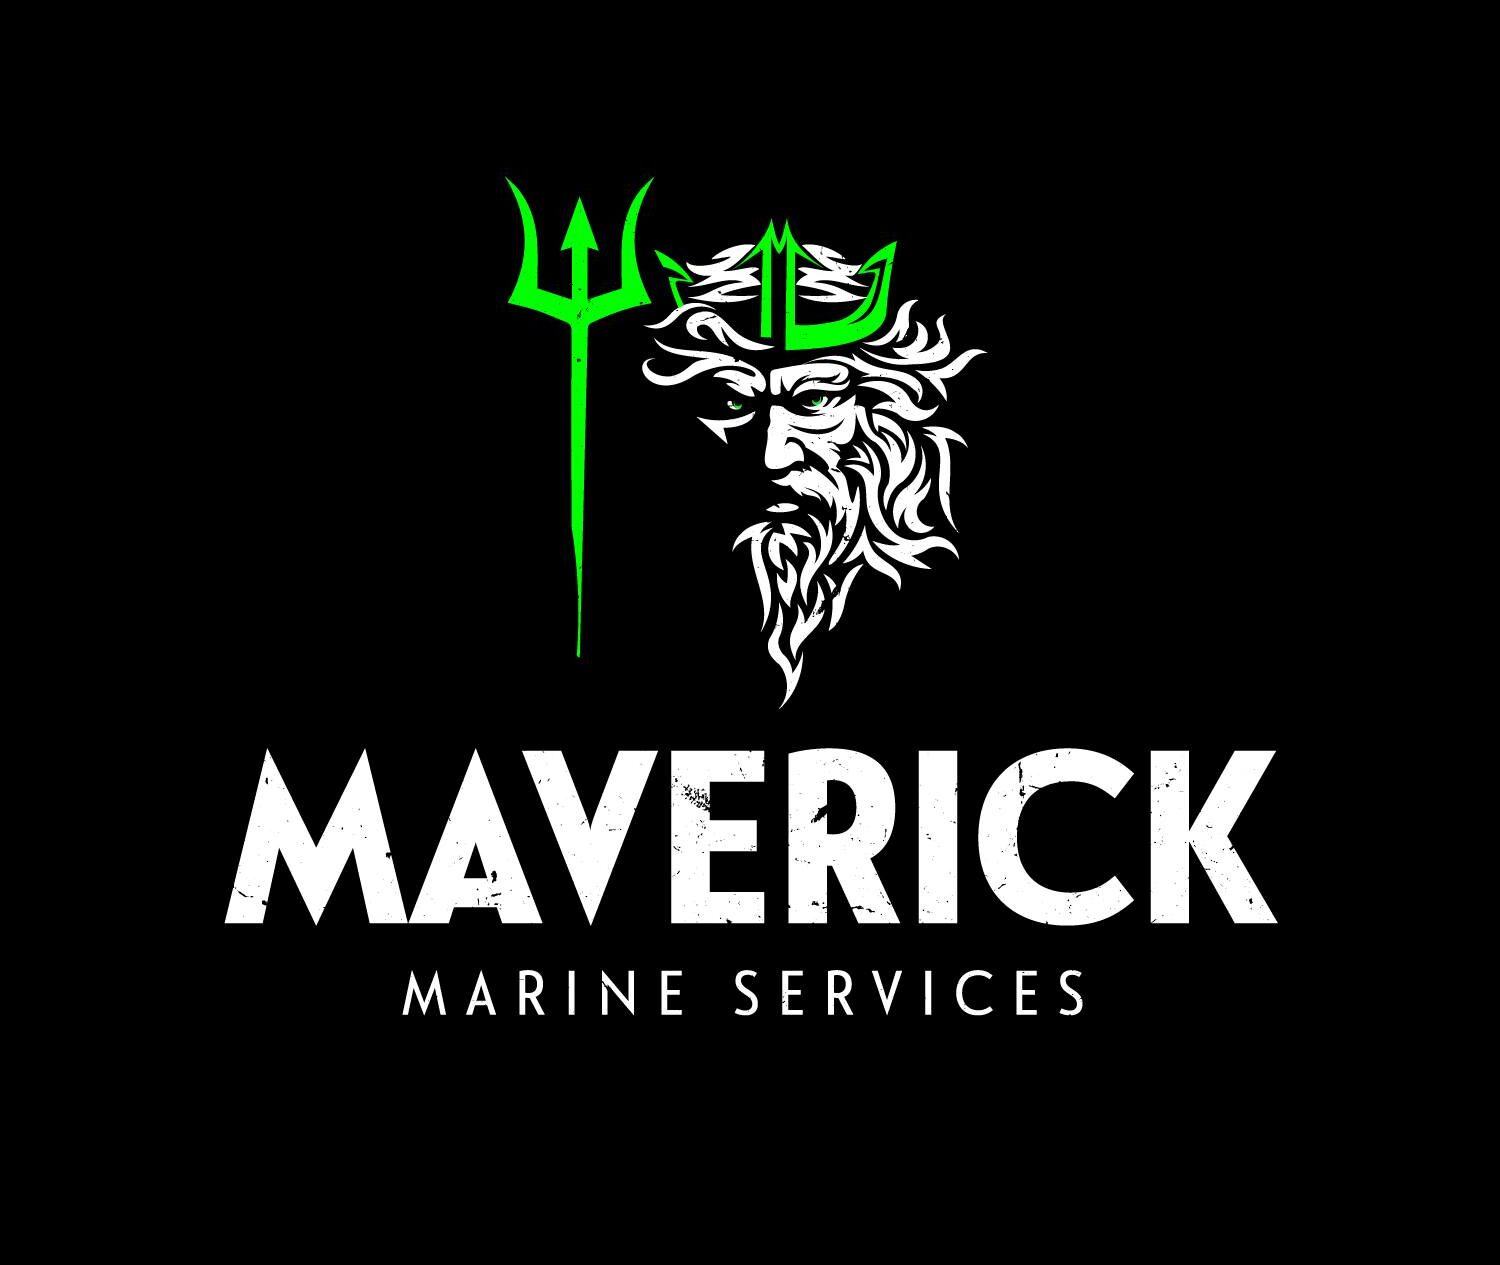 Maverick Marine Services